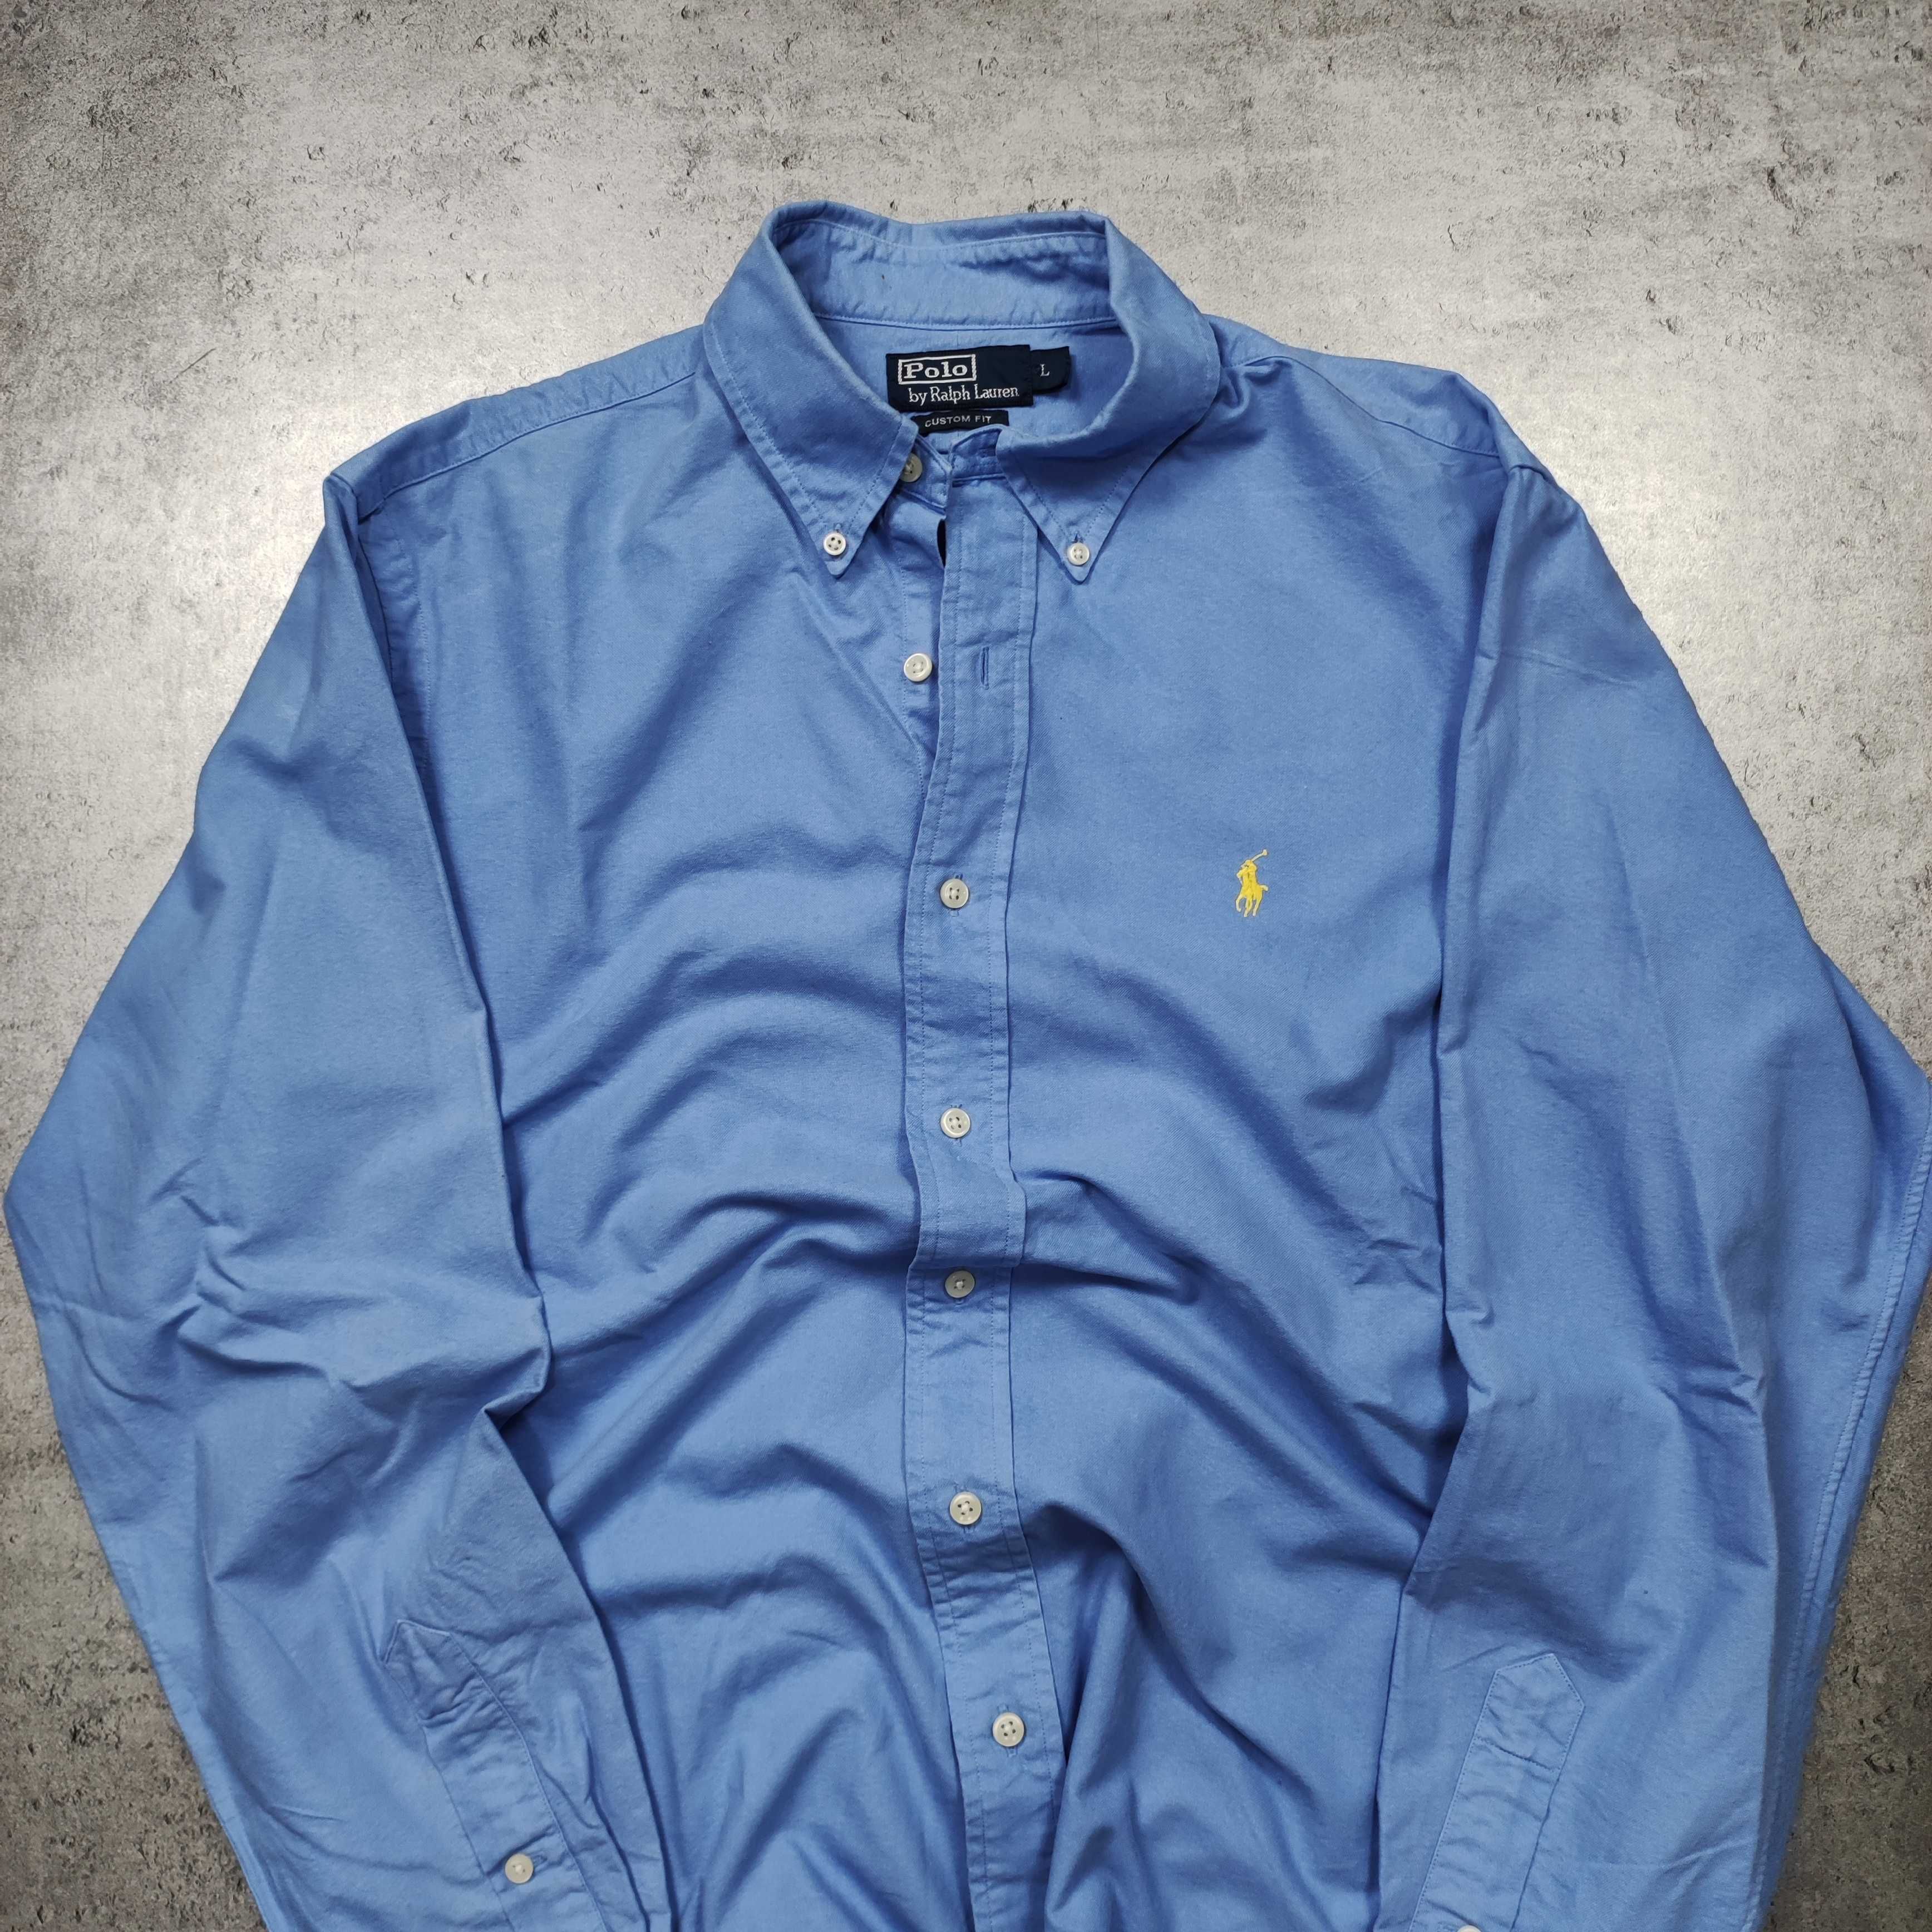 MĘSKA Elegancka Niebieska Koszula Rozpinana GUZIKI Polo Ralph Lauren